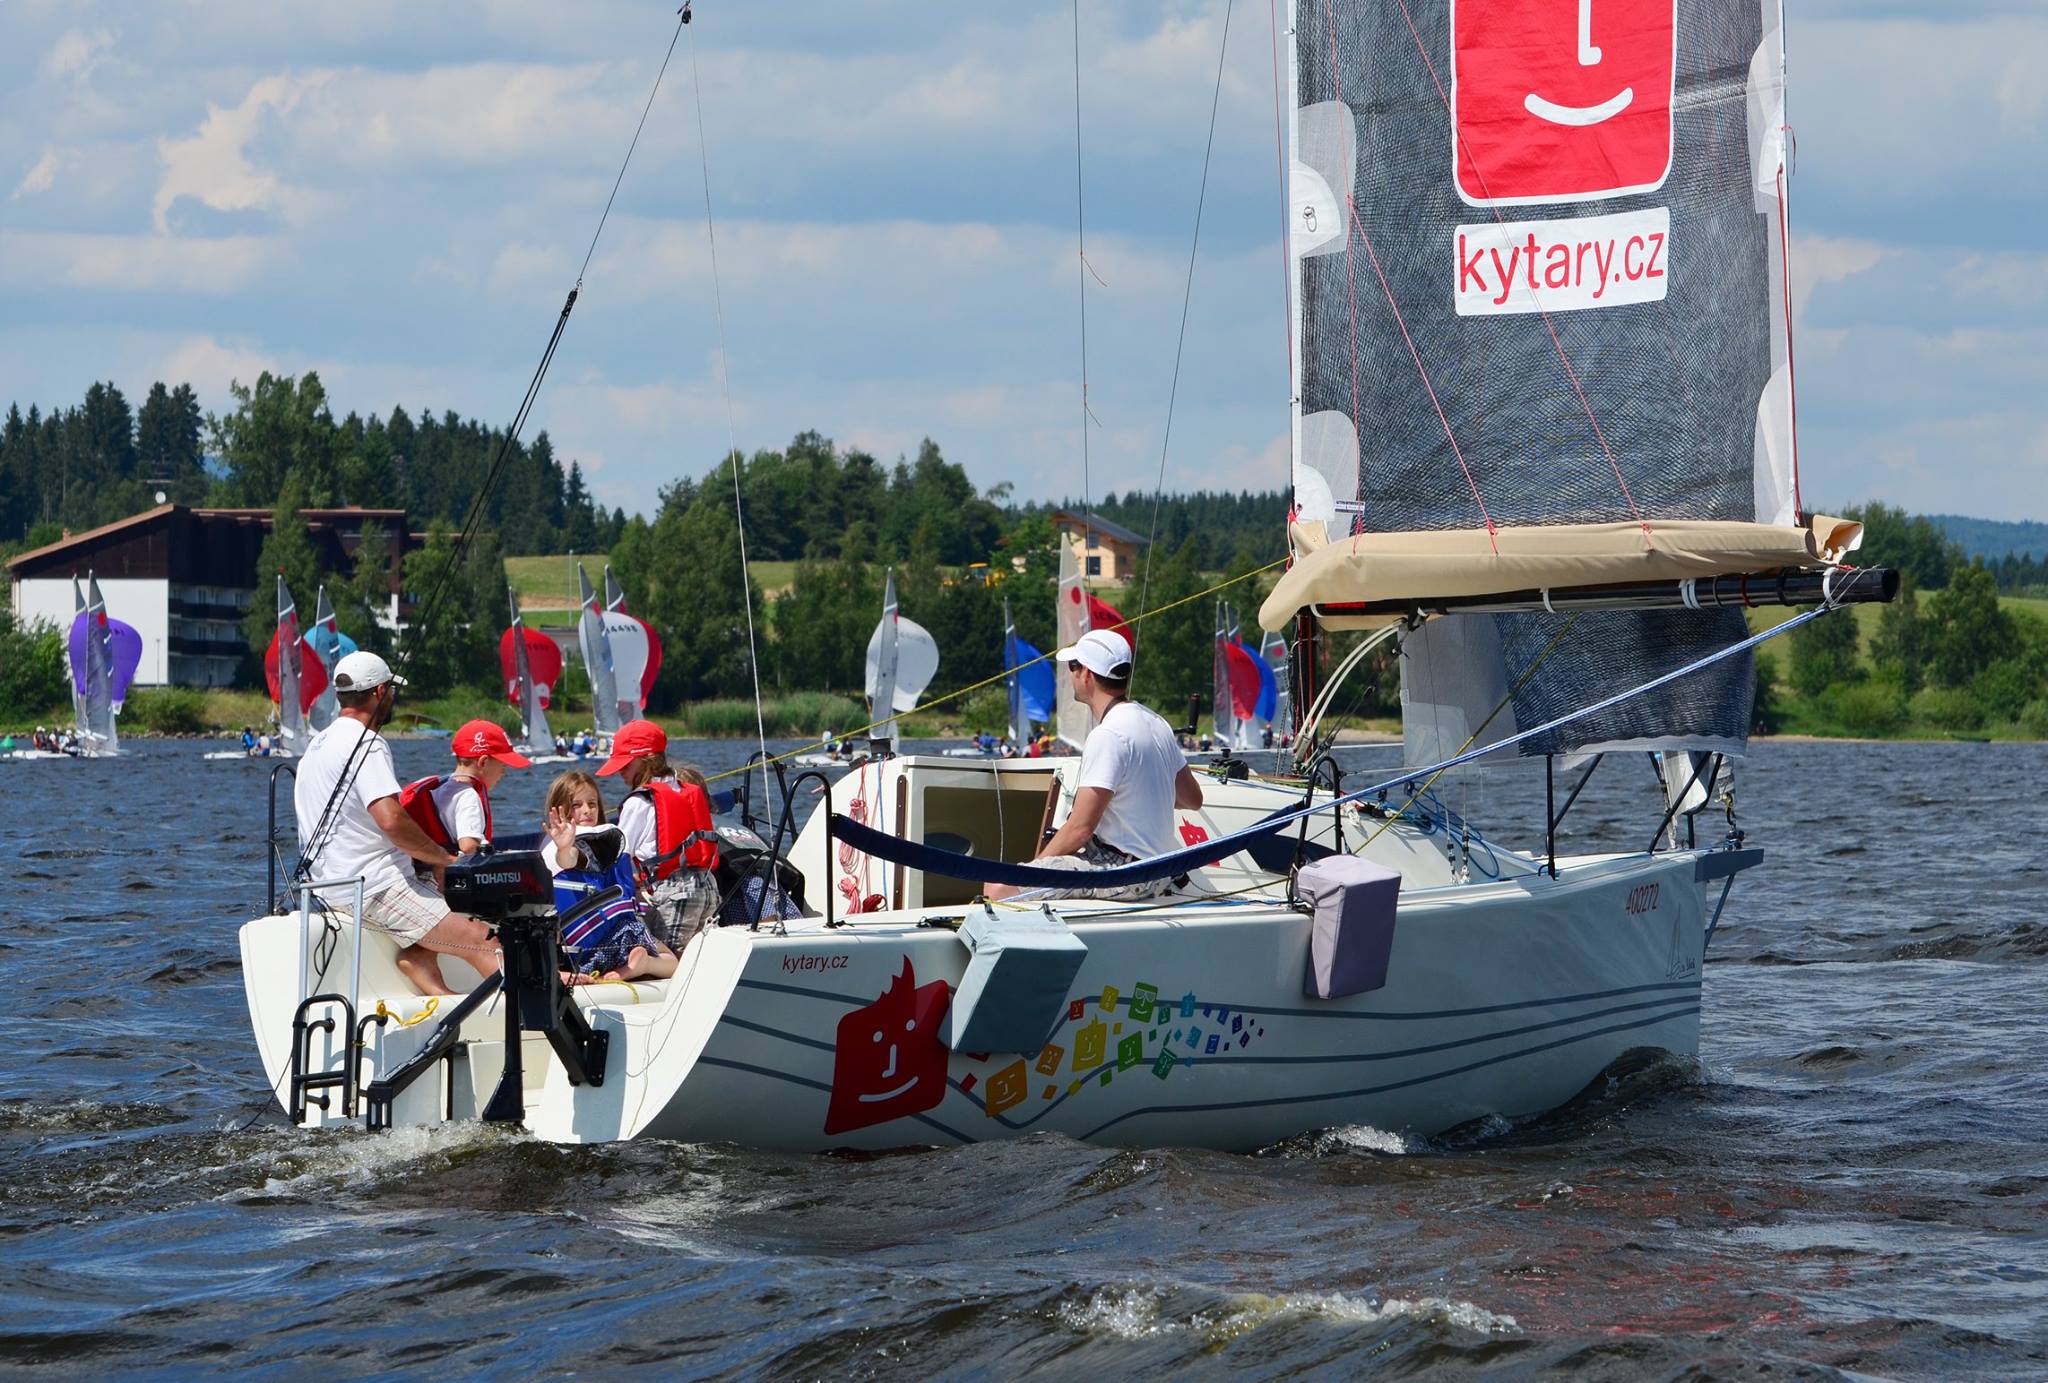 On a sailboat, Vladimír on the right| Source: Facebook Vladimír Myslík